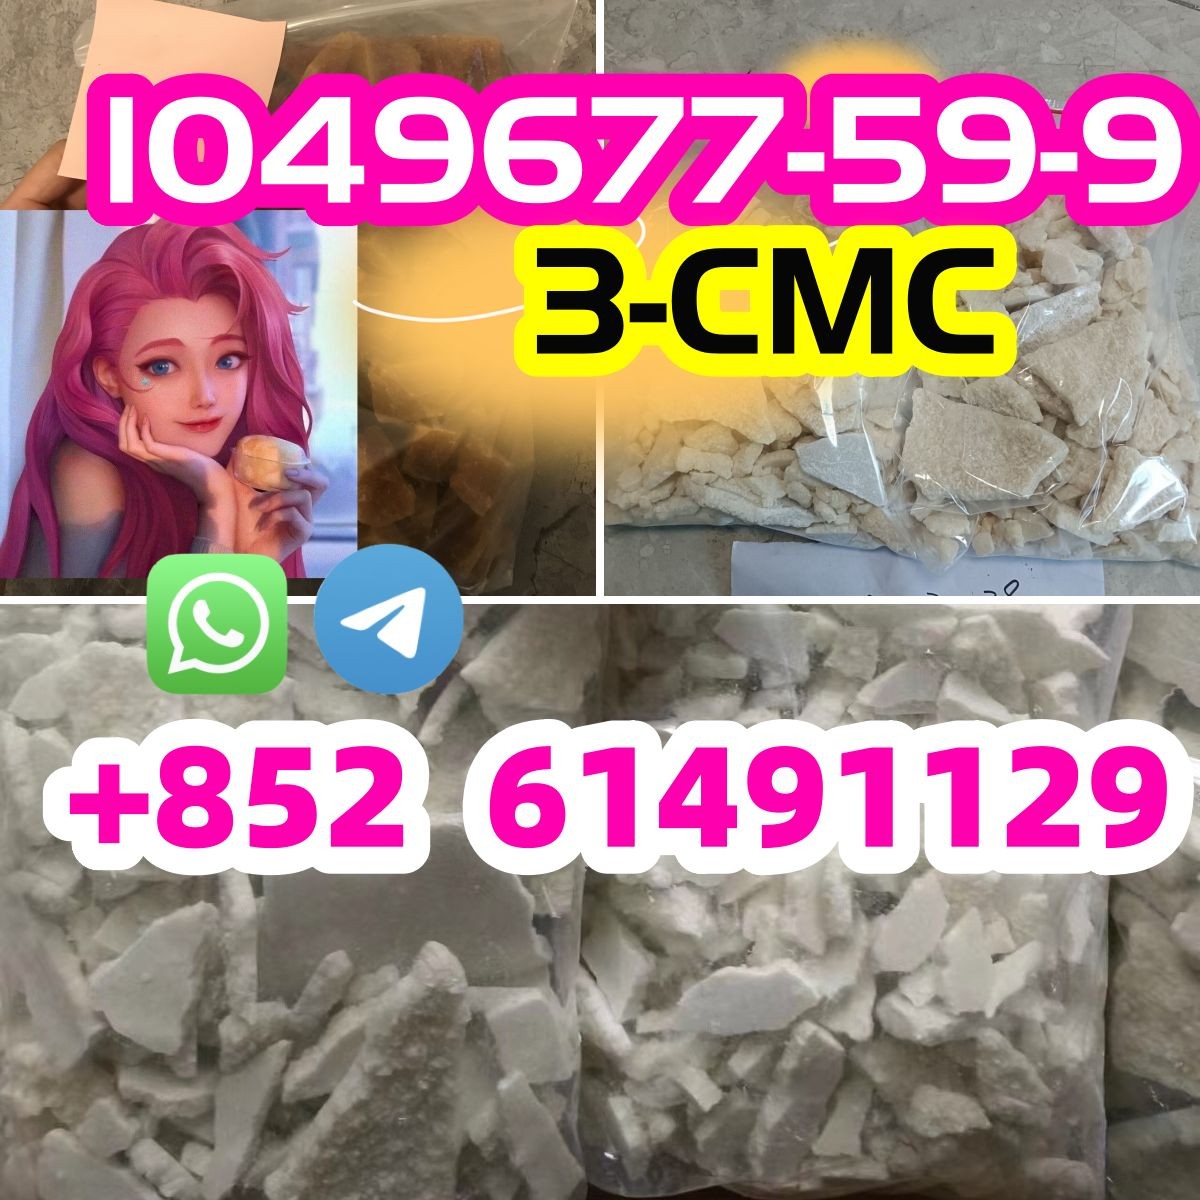 1049677-59-9 ,1607439-32-6,3-CMC,4CMC